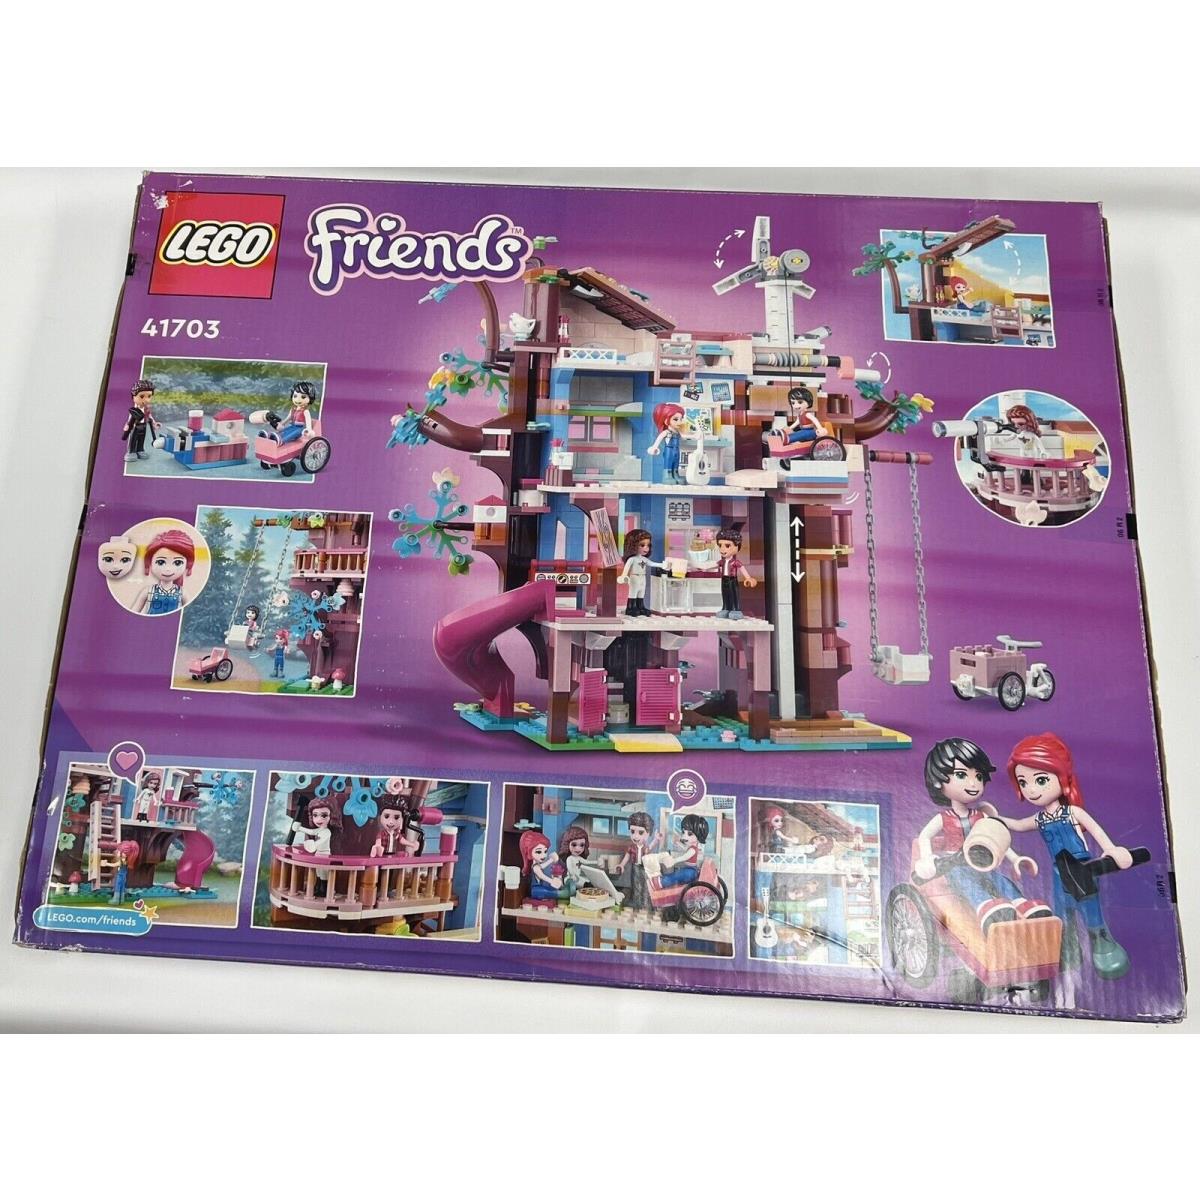 Lego Friends 41703 Friendship Tree House Complete Set